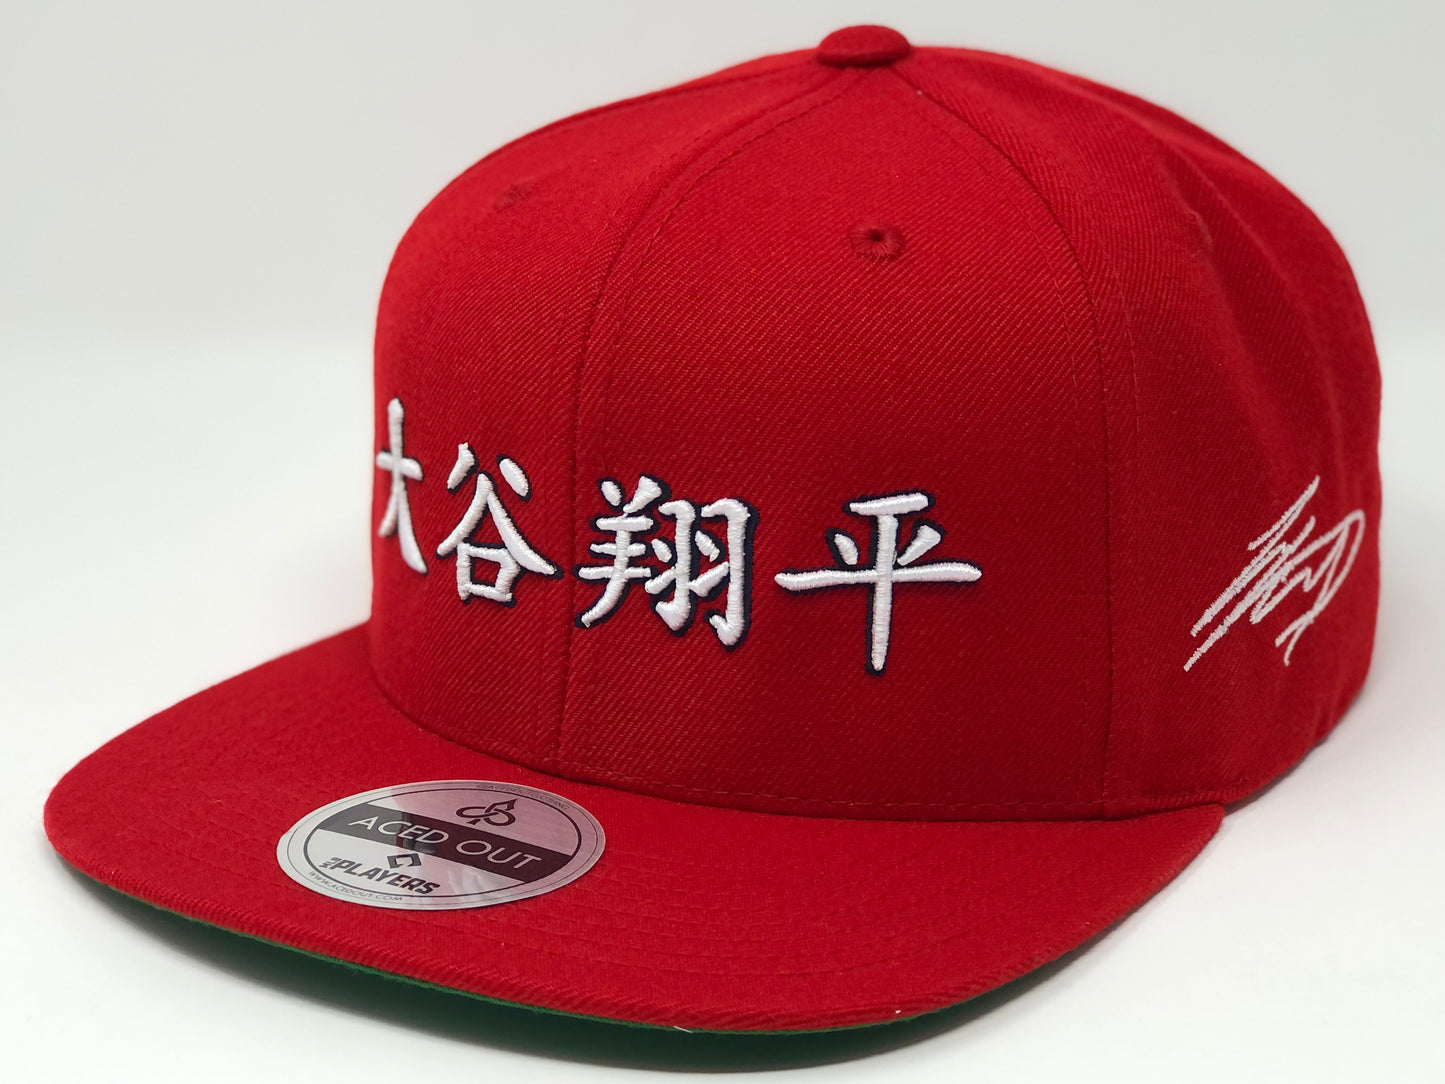 Shohei Ohtani Kanji Hat - Red Snapback